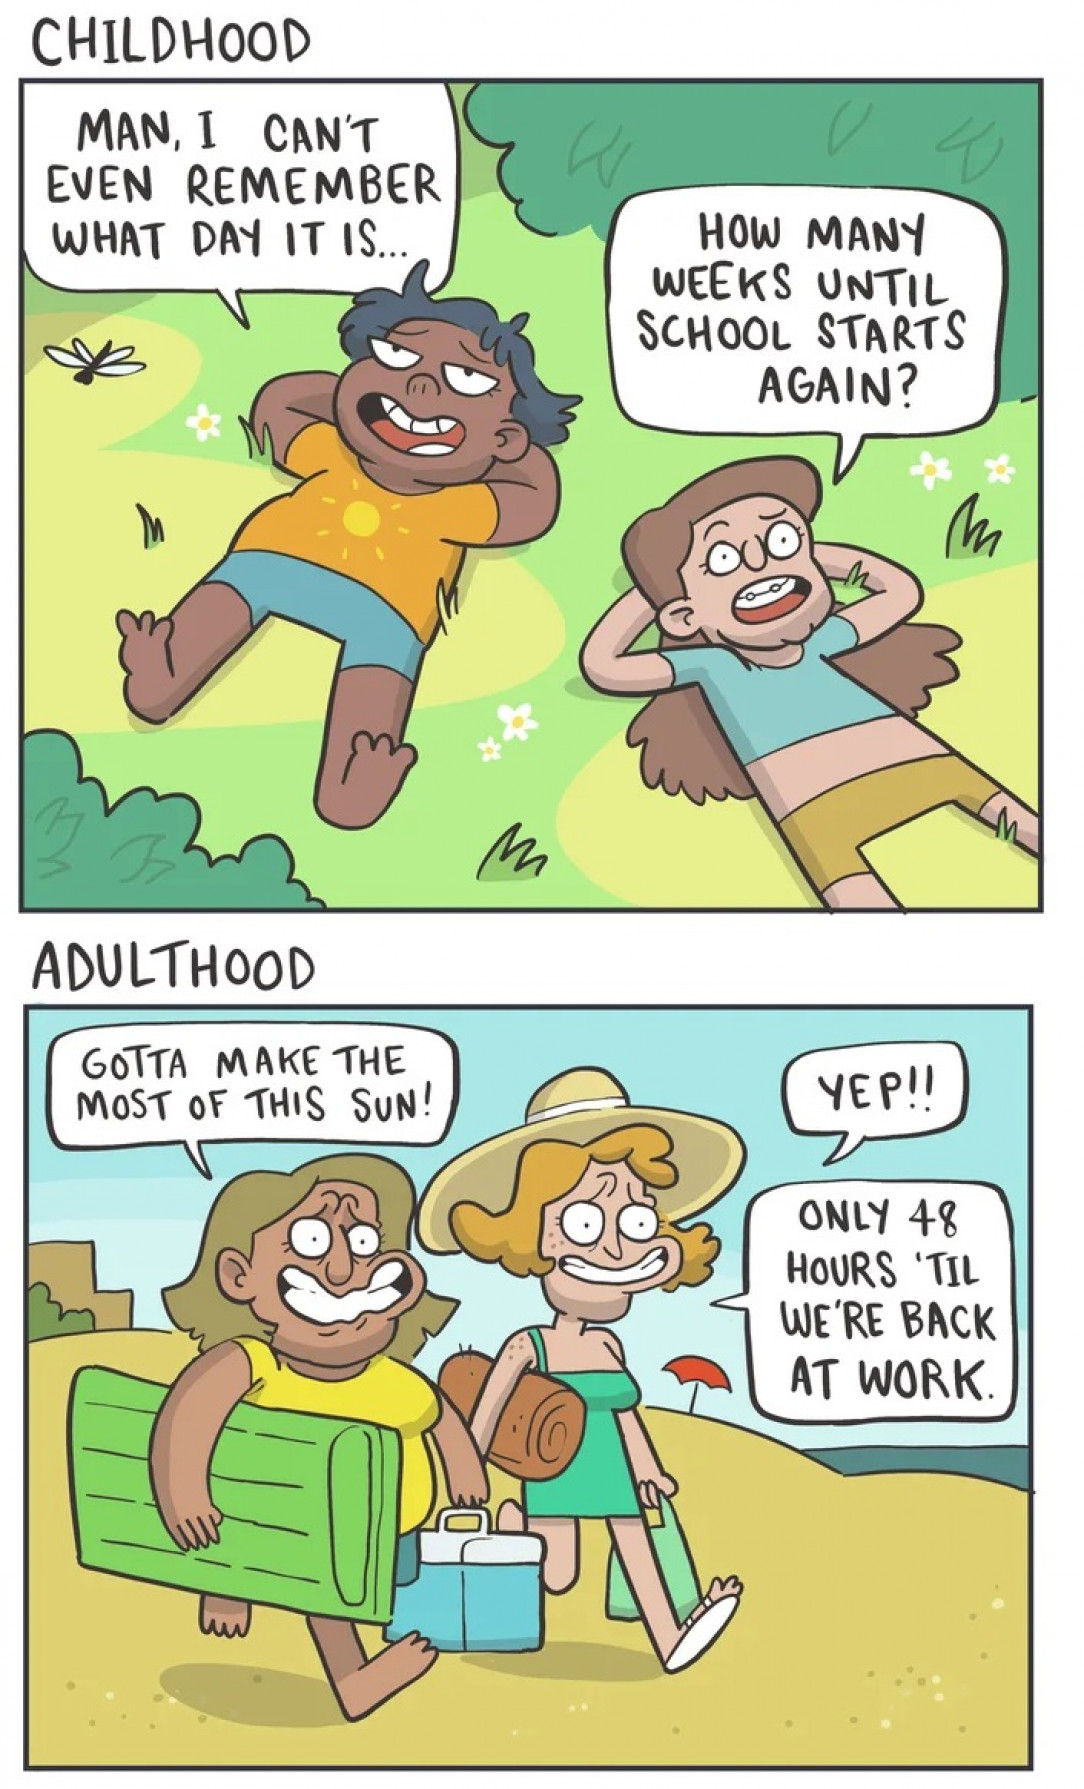 Comics: Summertime - Childhood vs Adulthood (Time Off)